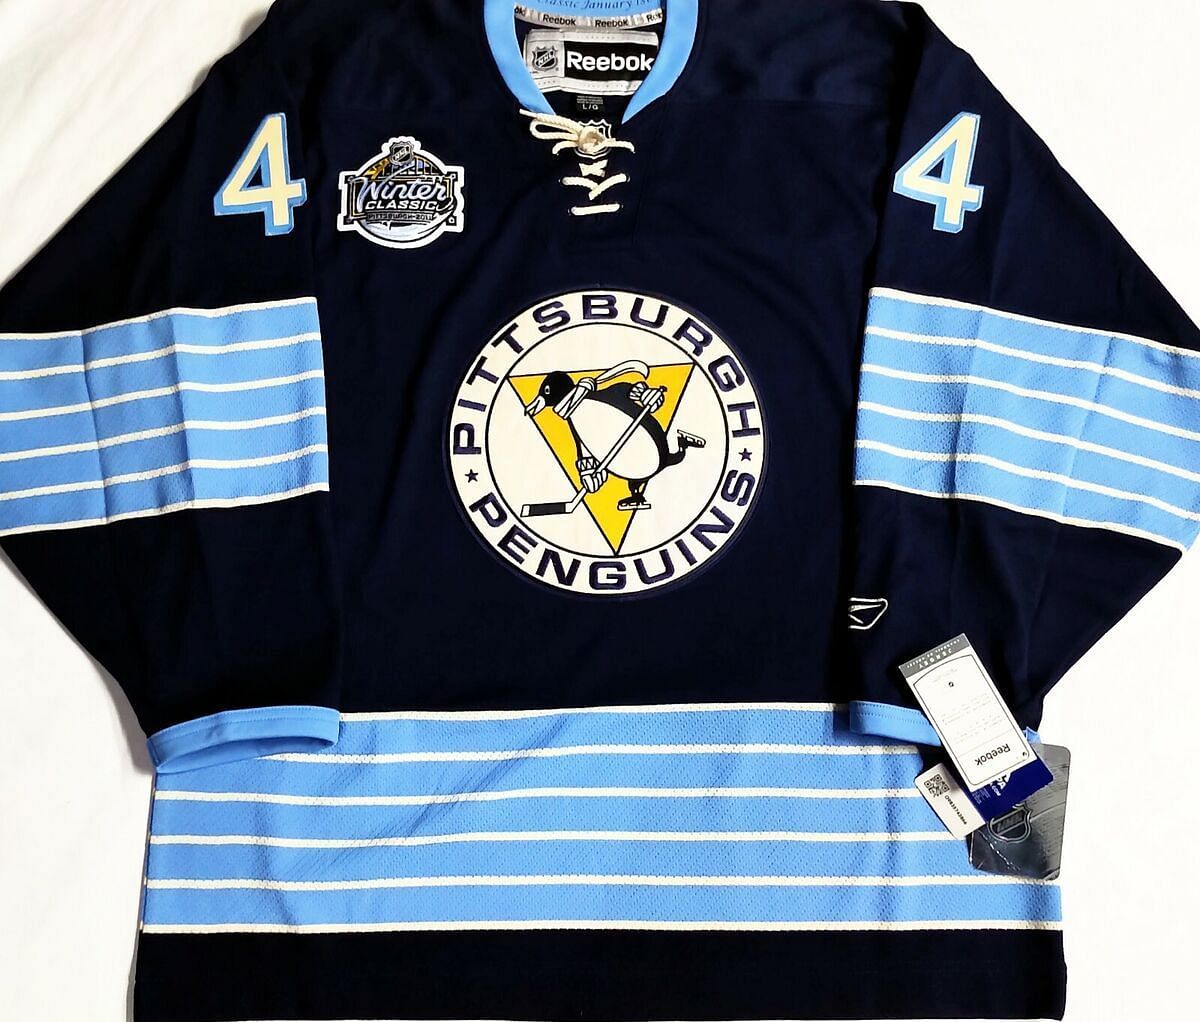 2011 Penguins jersey